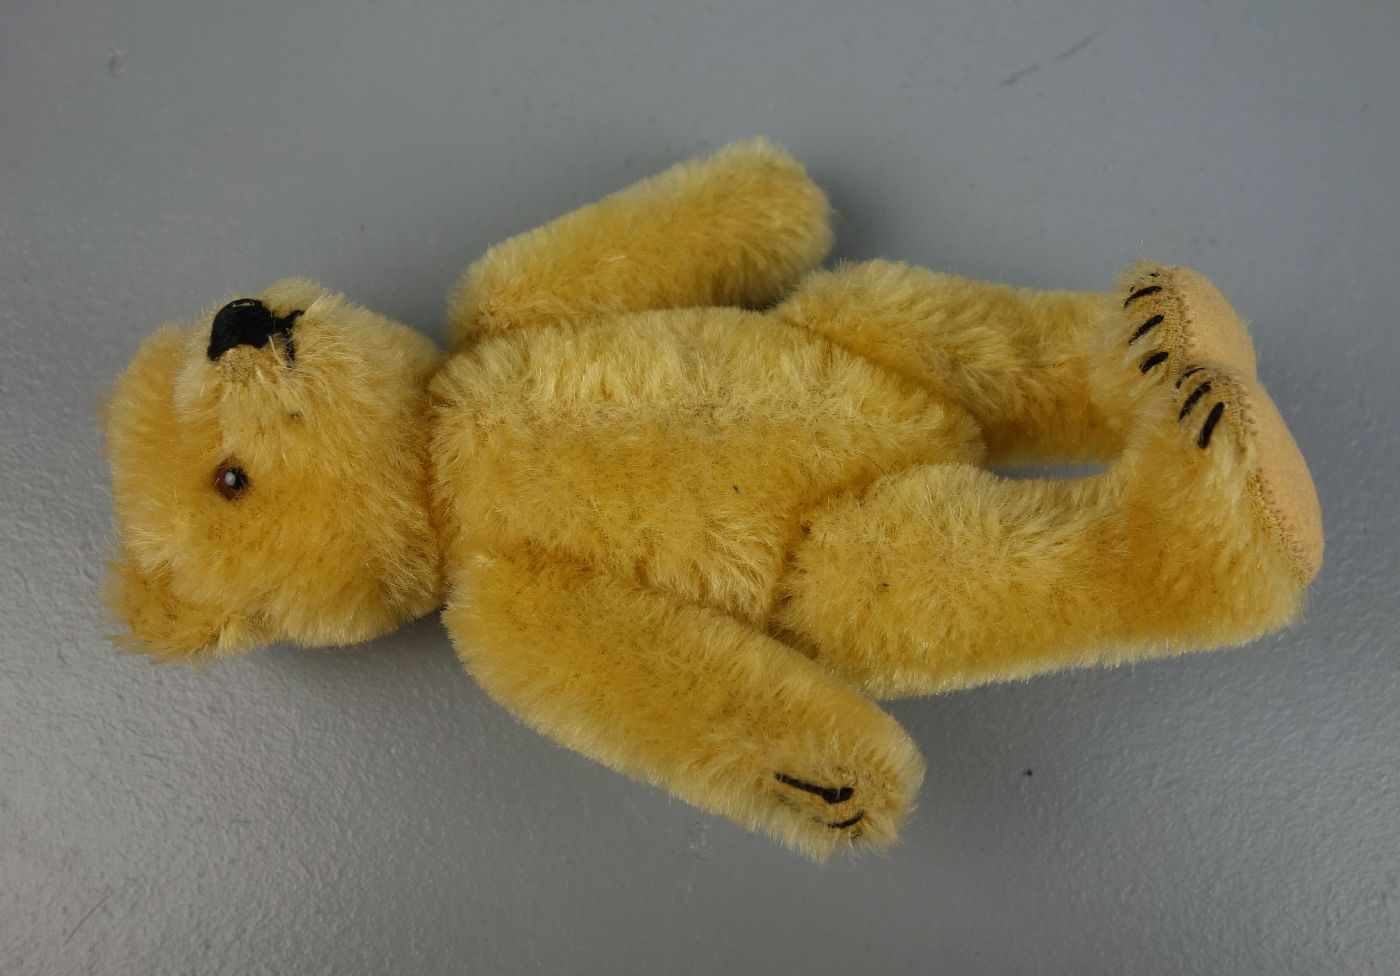 PLÜSCHTIERE / PLÜSCHFIGUREN: 3 Steiff-Teddys / Teddybären / teddy bears, 20. Jh., Manufaktur Steiff. - Image 2 of 11